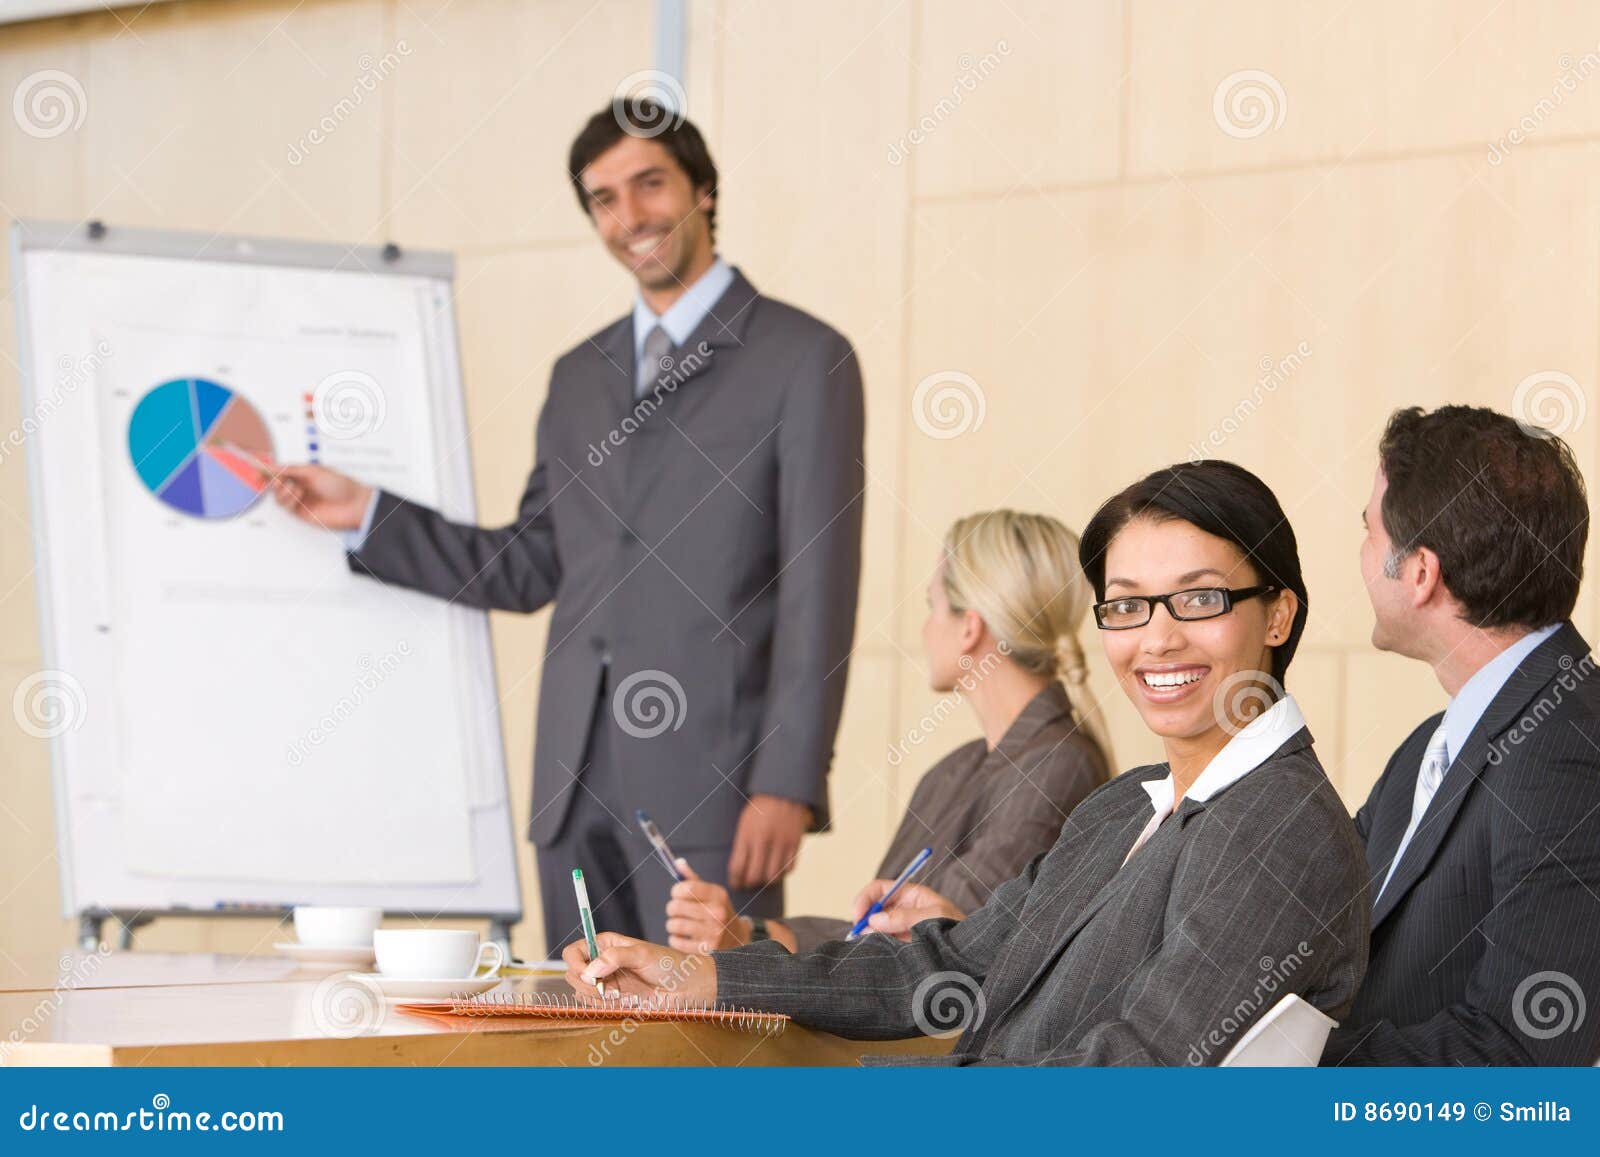 a person who presents a presentation